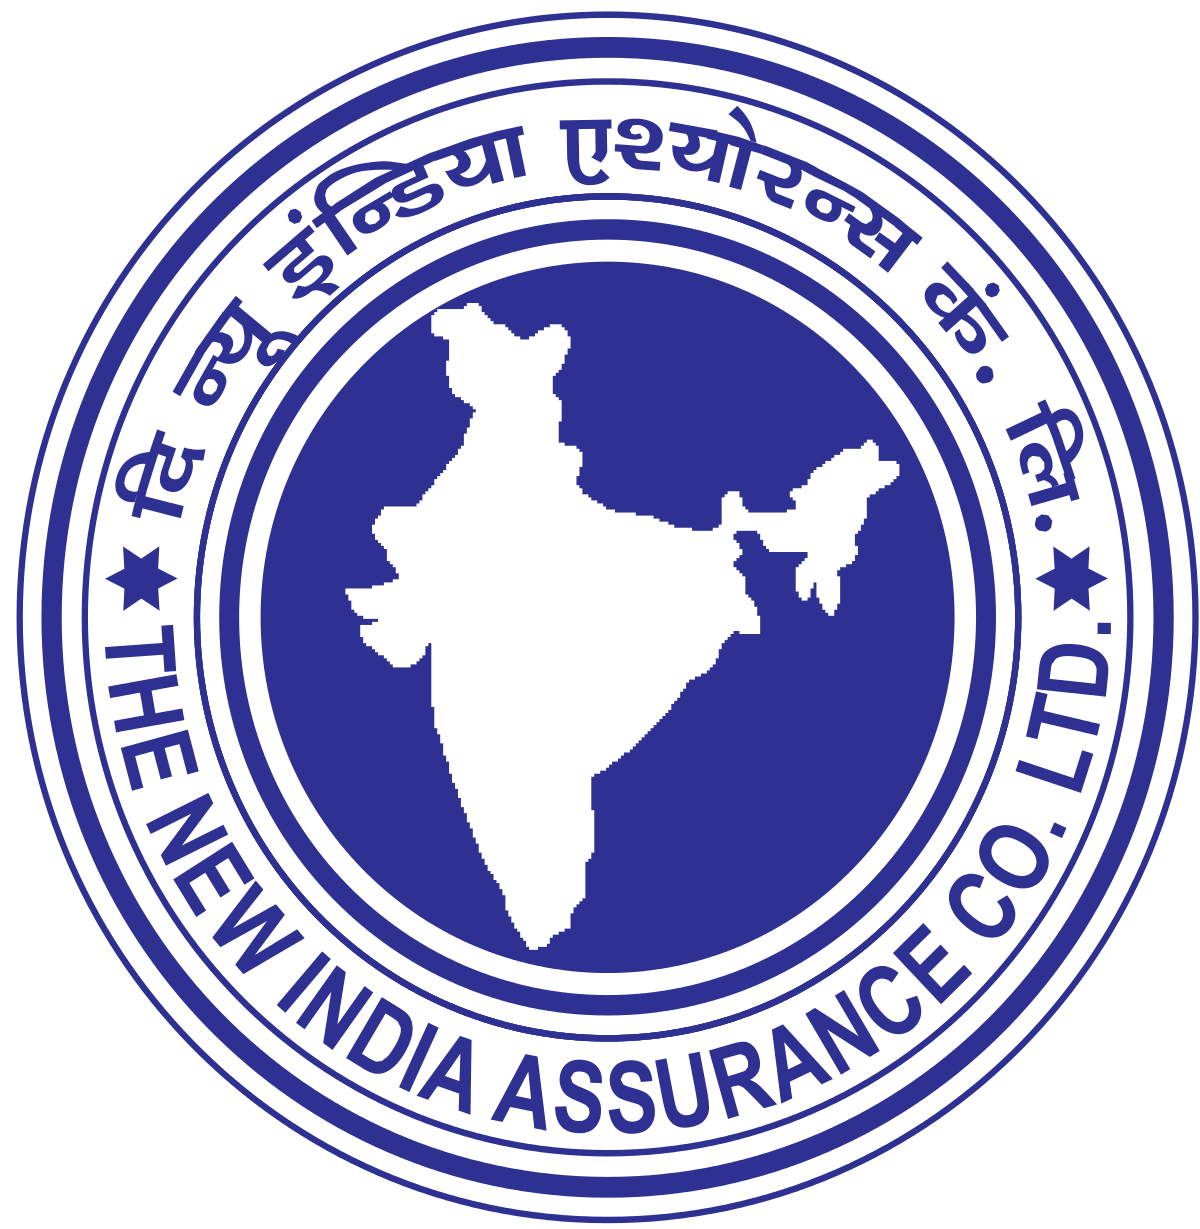 New India Assuranc Company Ltd